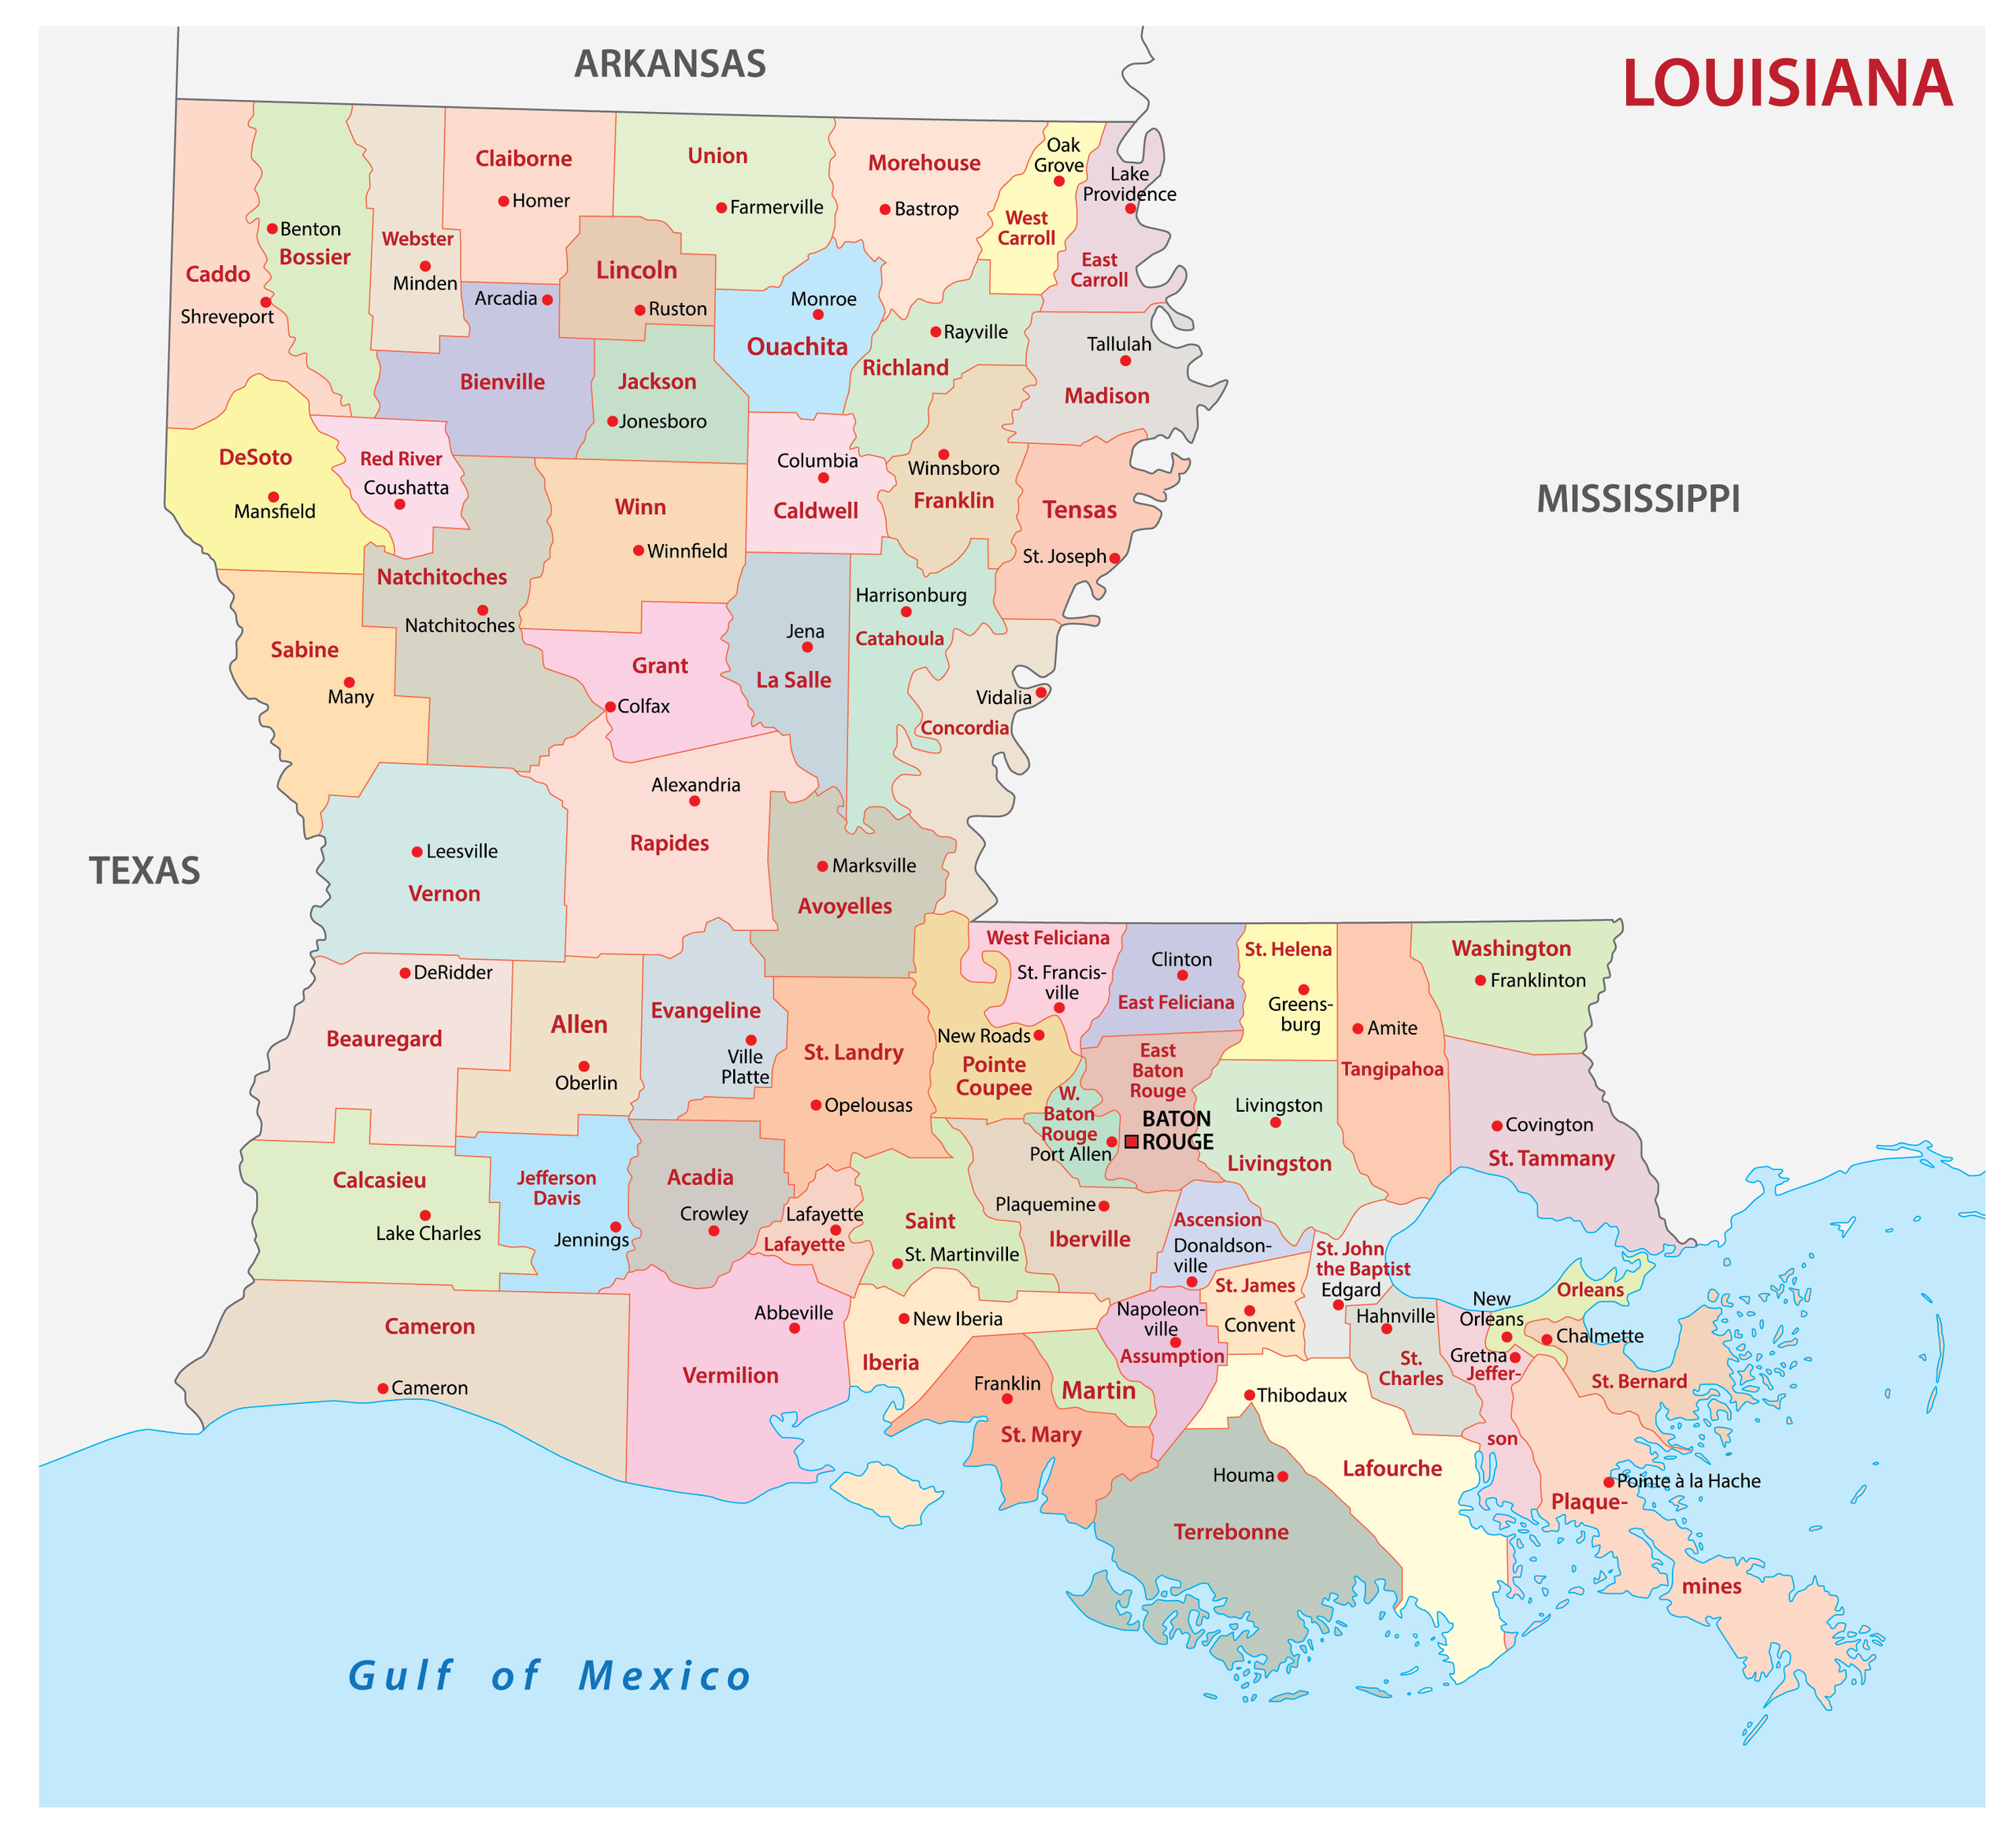 Louisiana (U.S.)